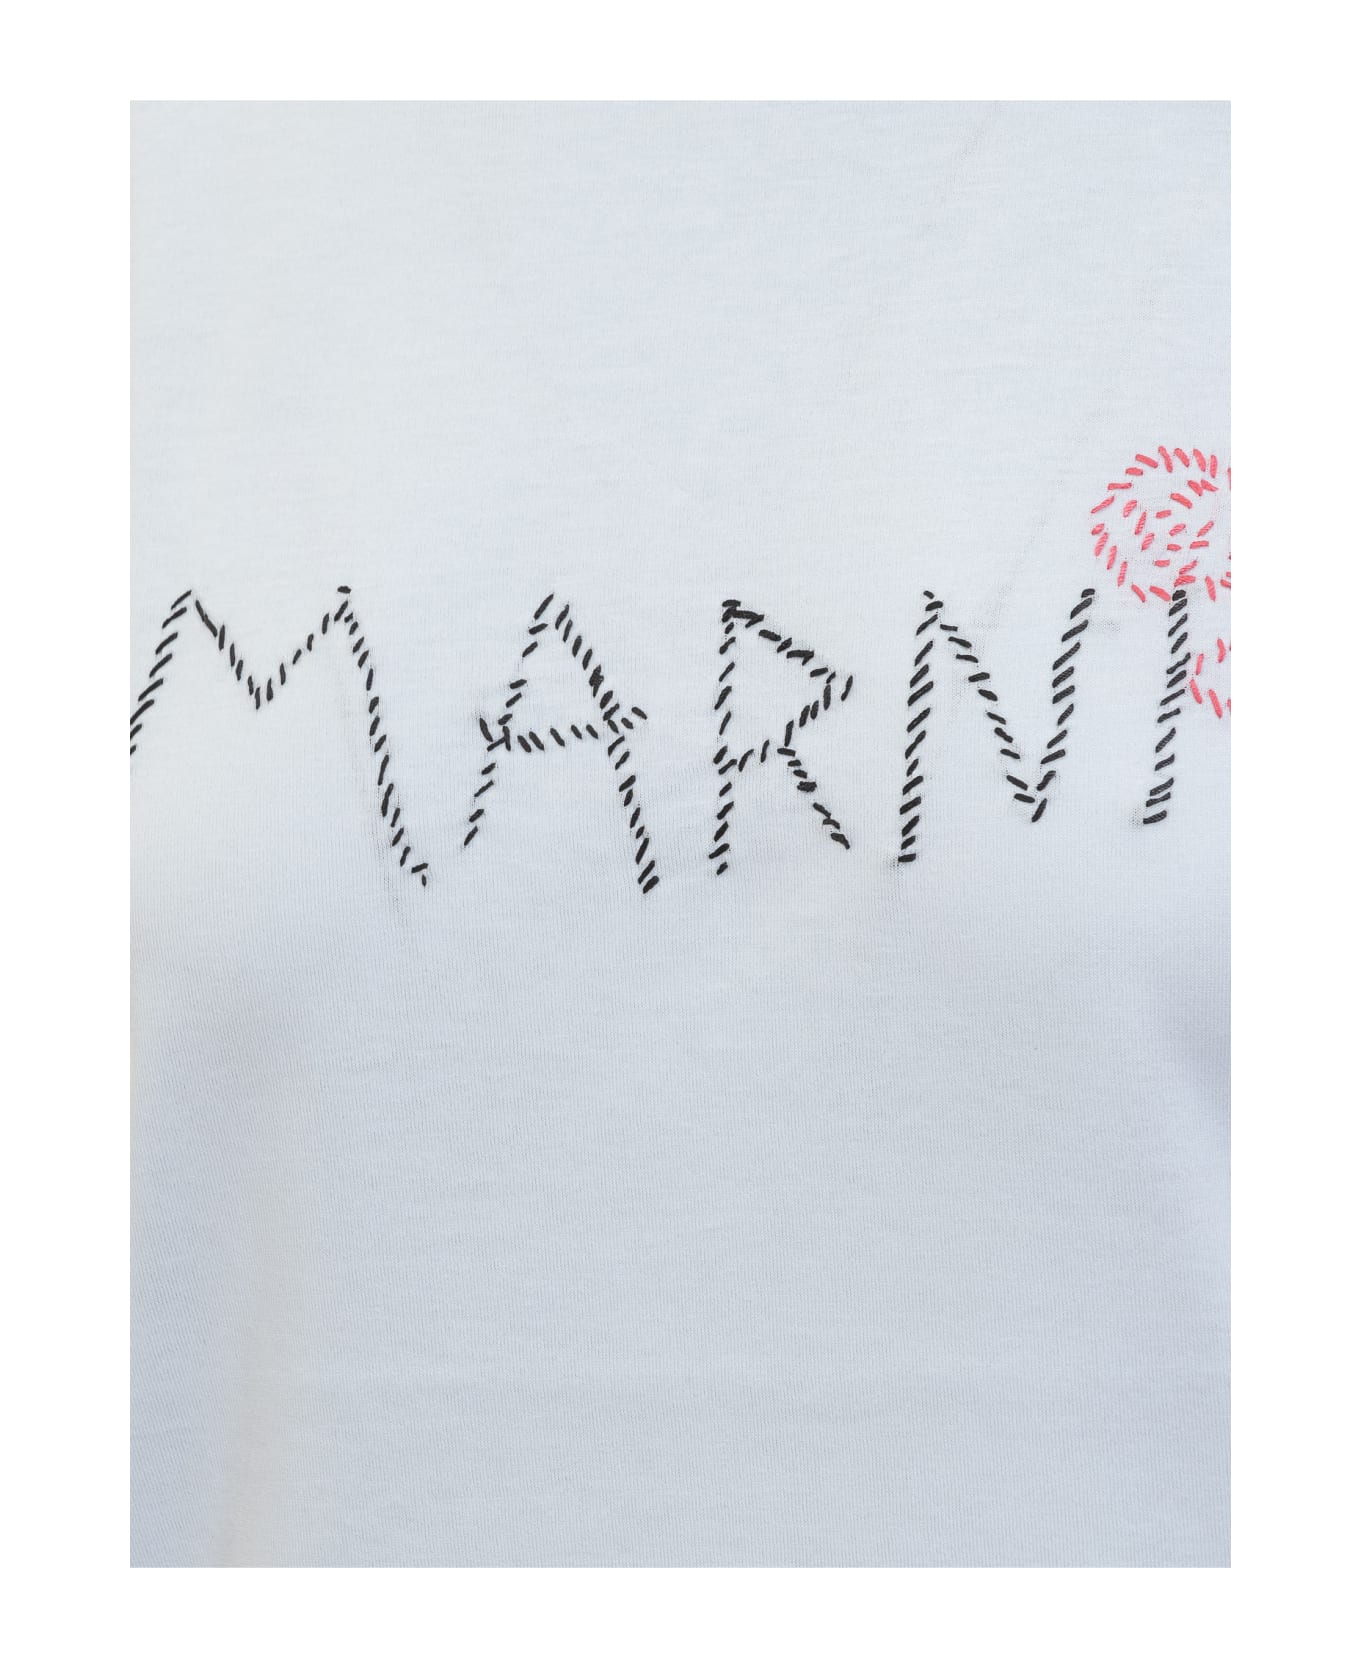 Marni T-shirt With Logo - LIGHT BLUE